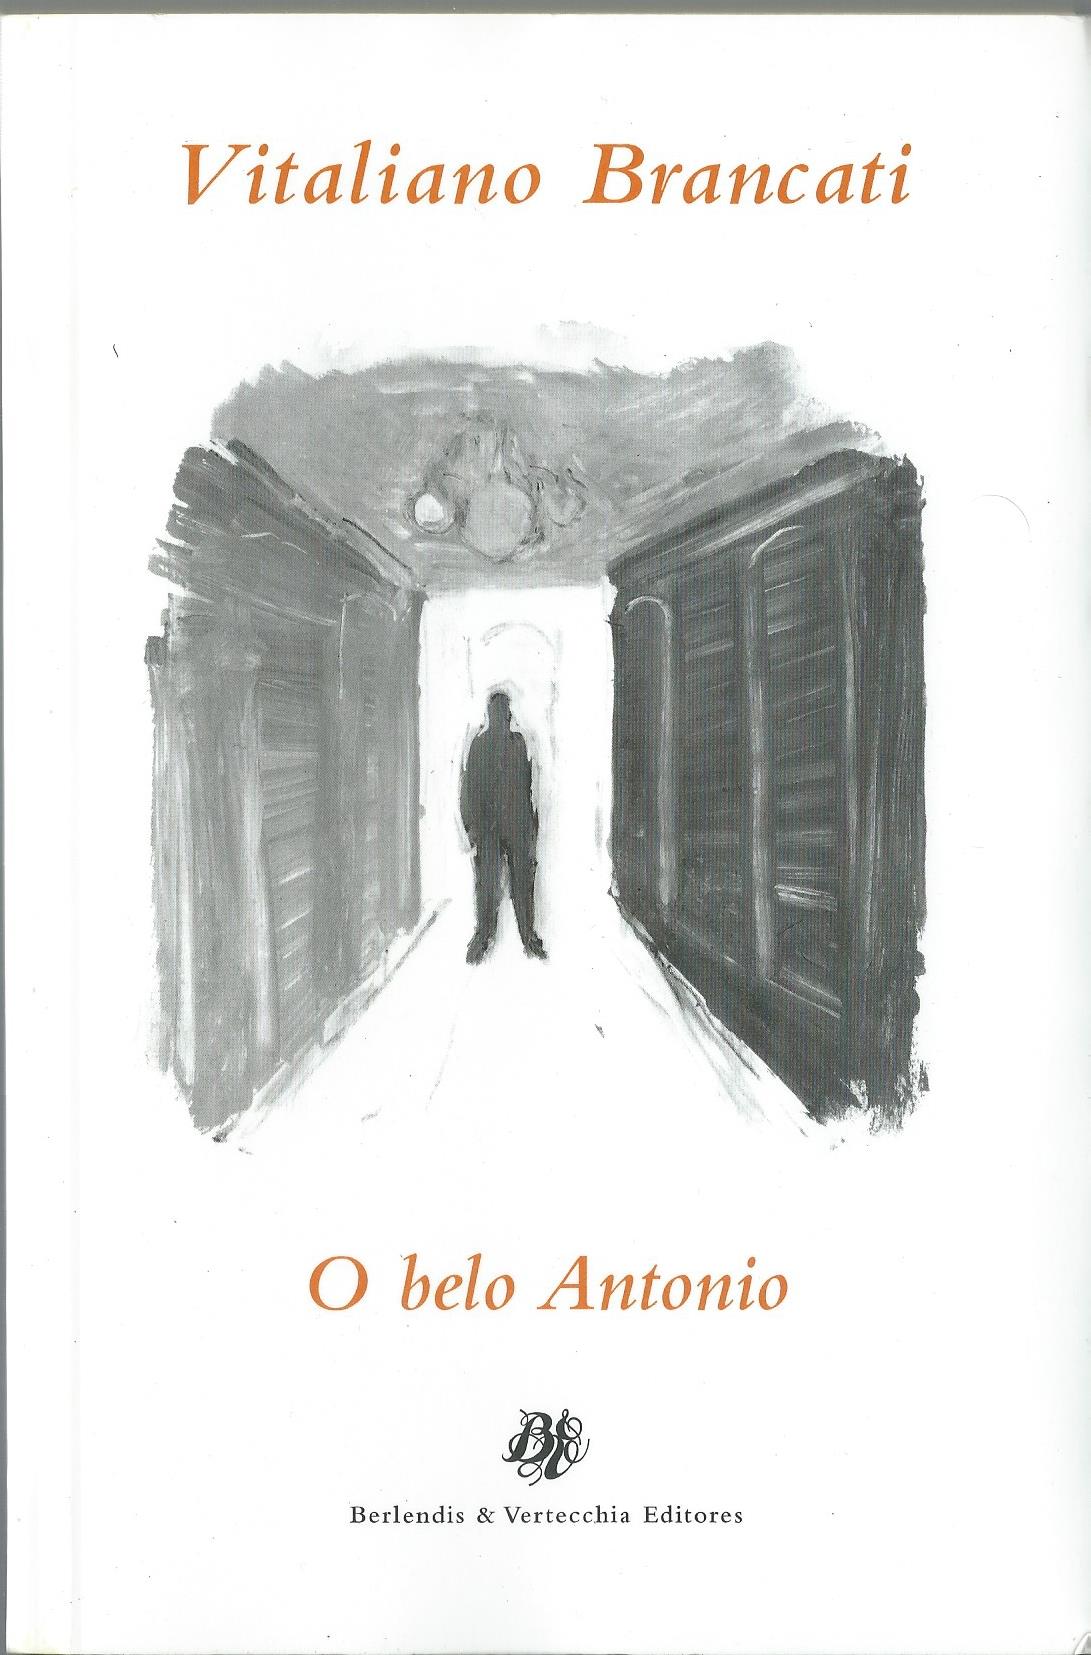 https://www.literaturabrasileira.ufsc.br/_images/obras/brancati_o_belo_antonio.jpg